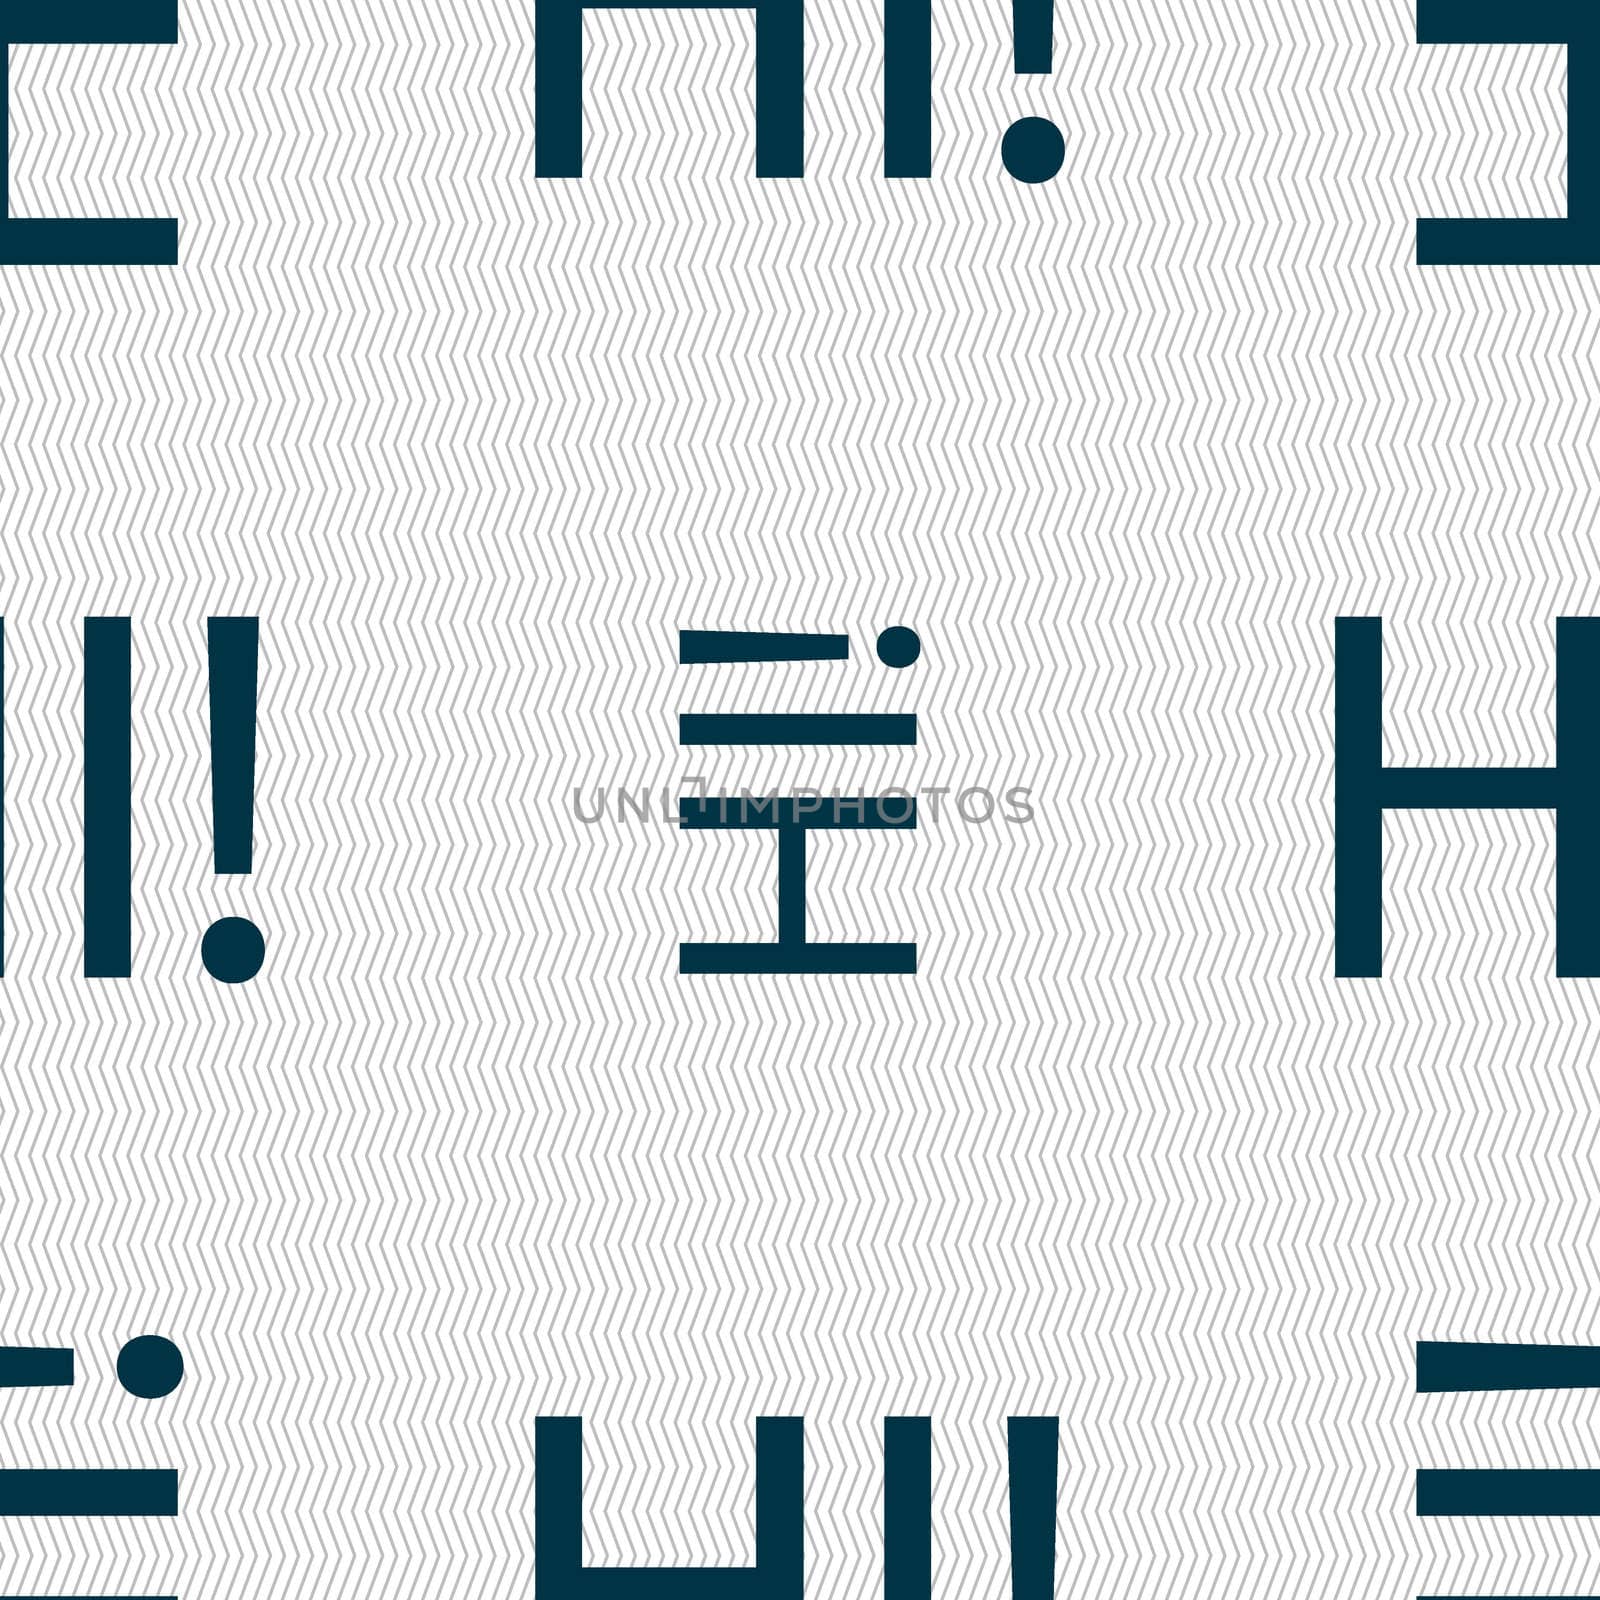 HI sign icon. India translation symbol. Seamless abstract background with geometric shapes.  by serhii_lohvyniuk